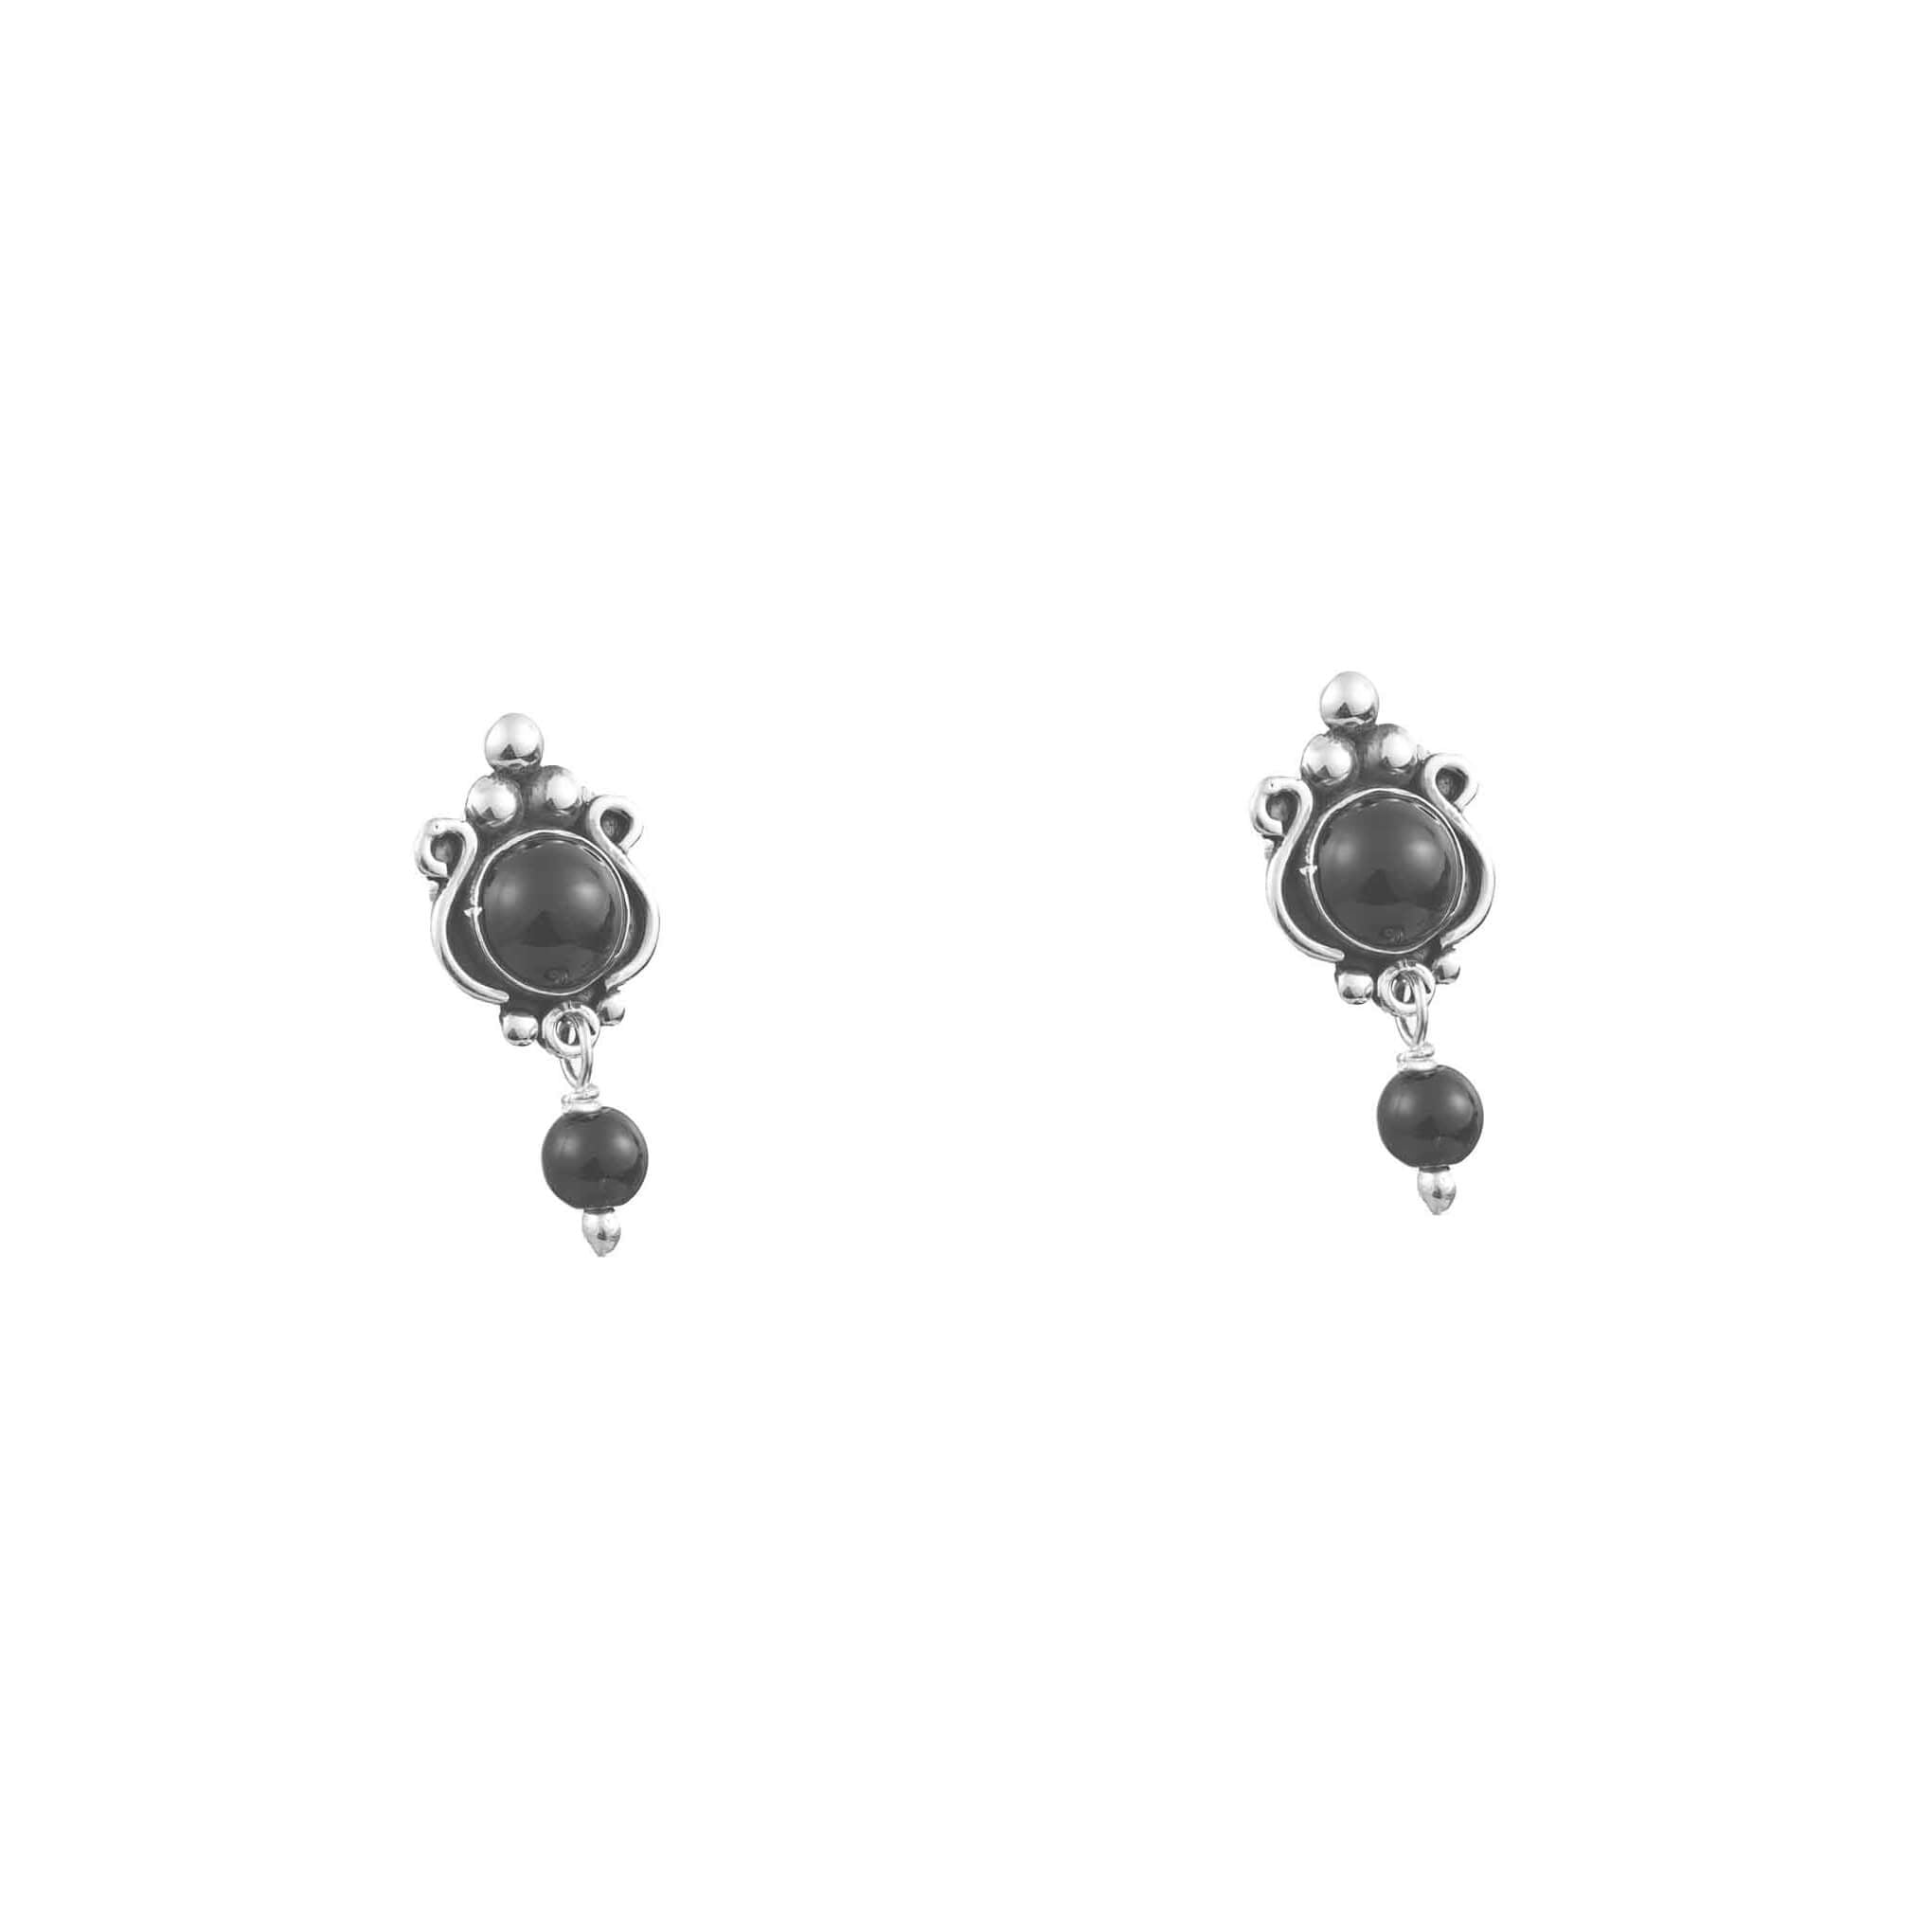 Classic molded silver earrings